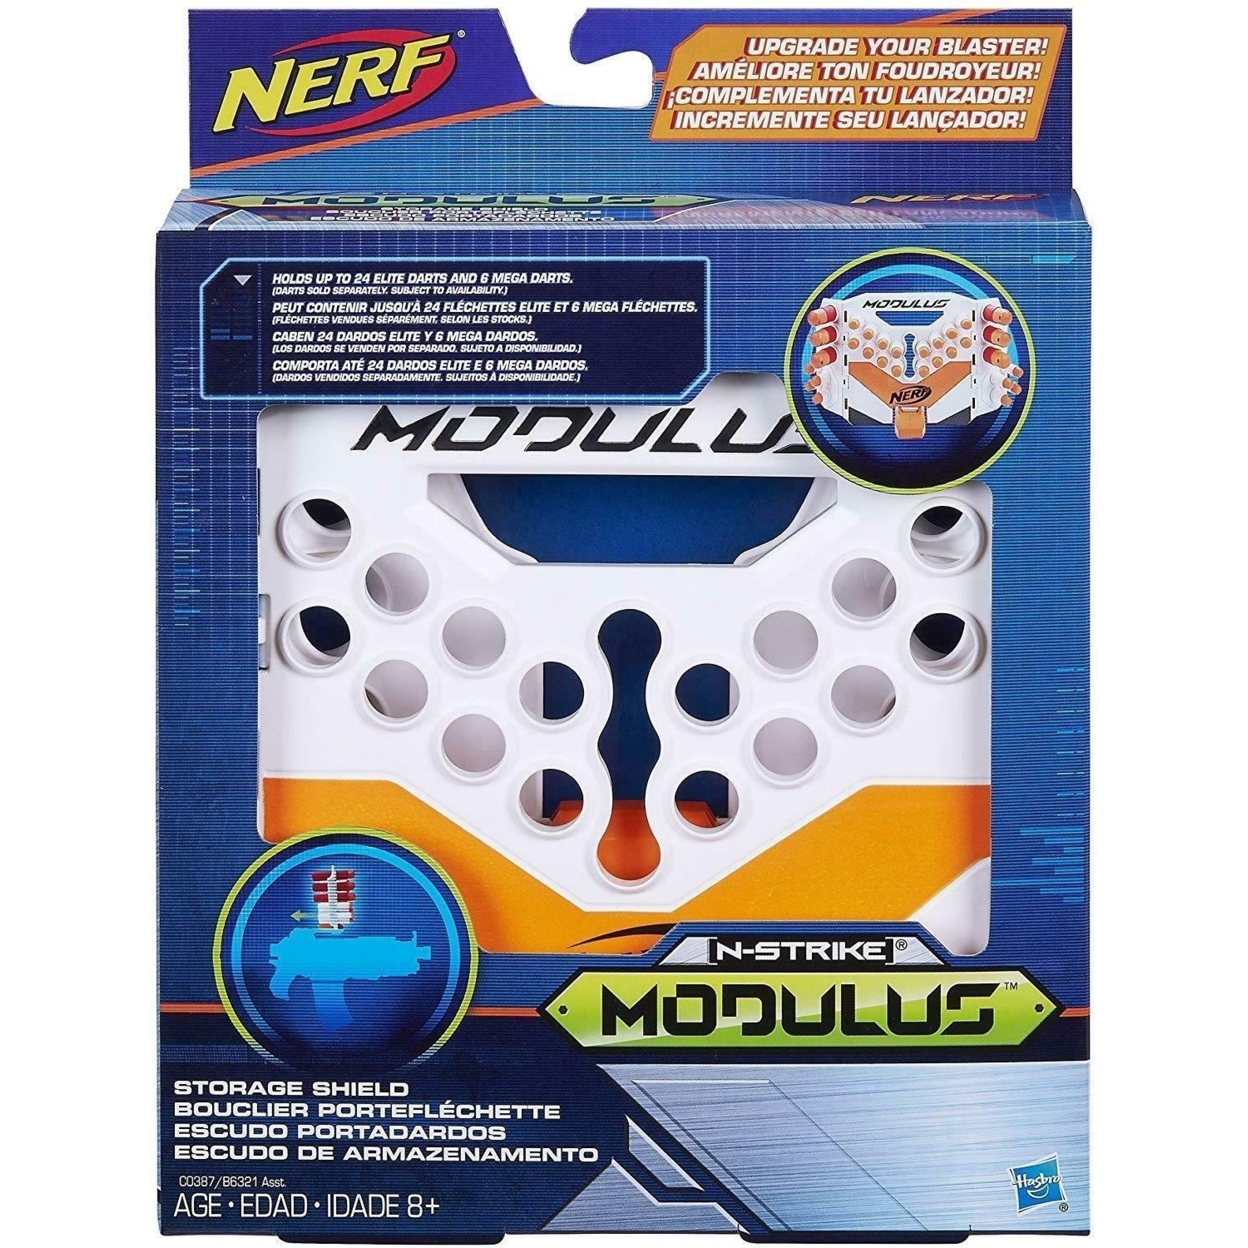 Nerf N-Strike Modulus Storage Shield For Blasters Accessory Hasbro